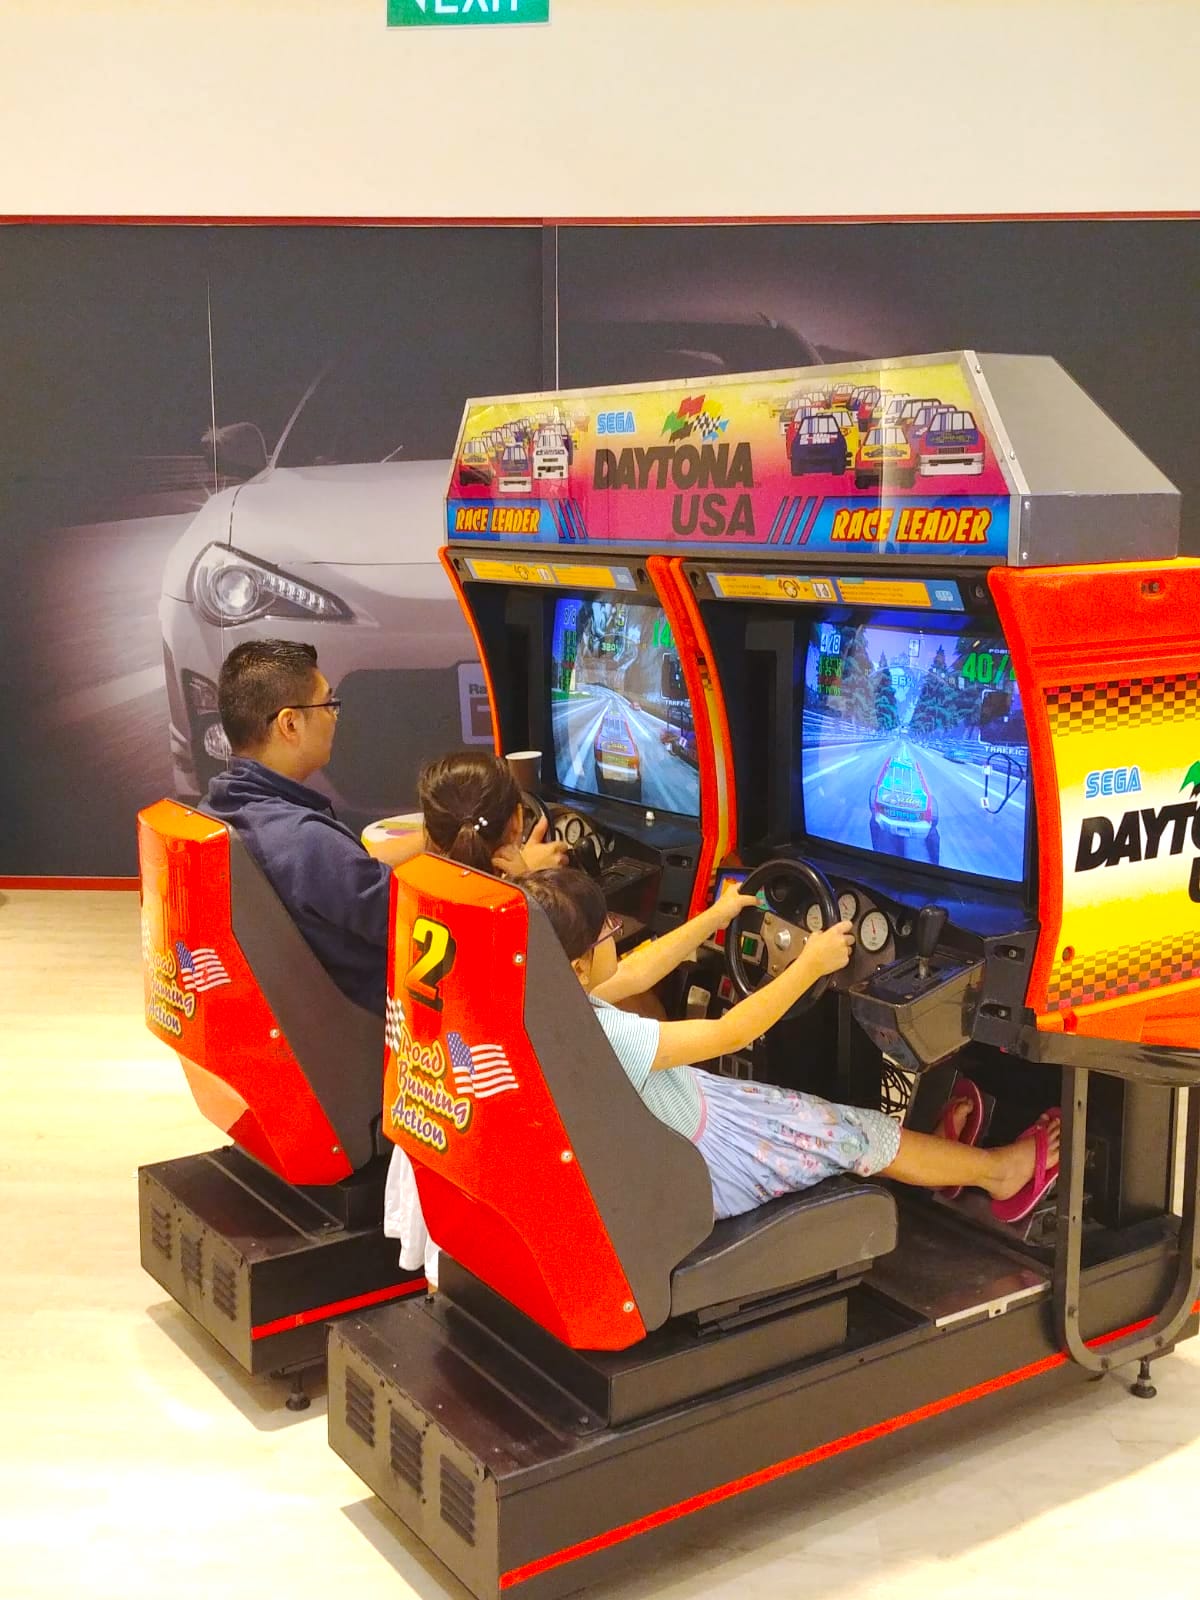 Retro Daytona Arcade Rental